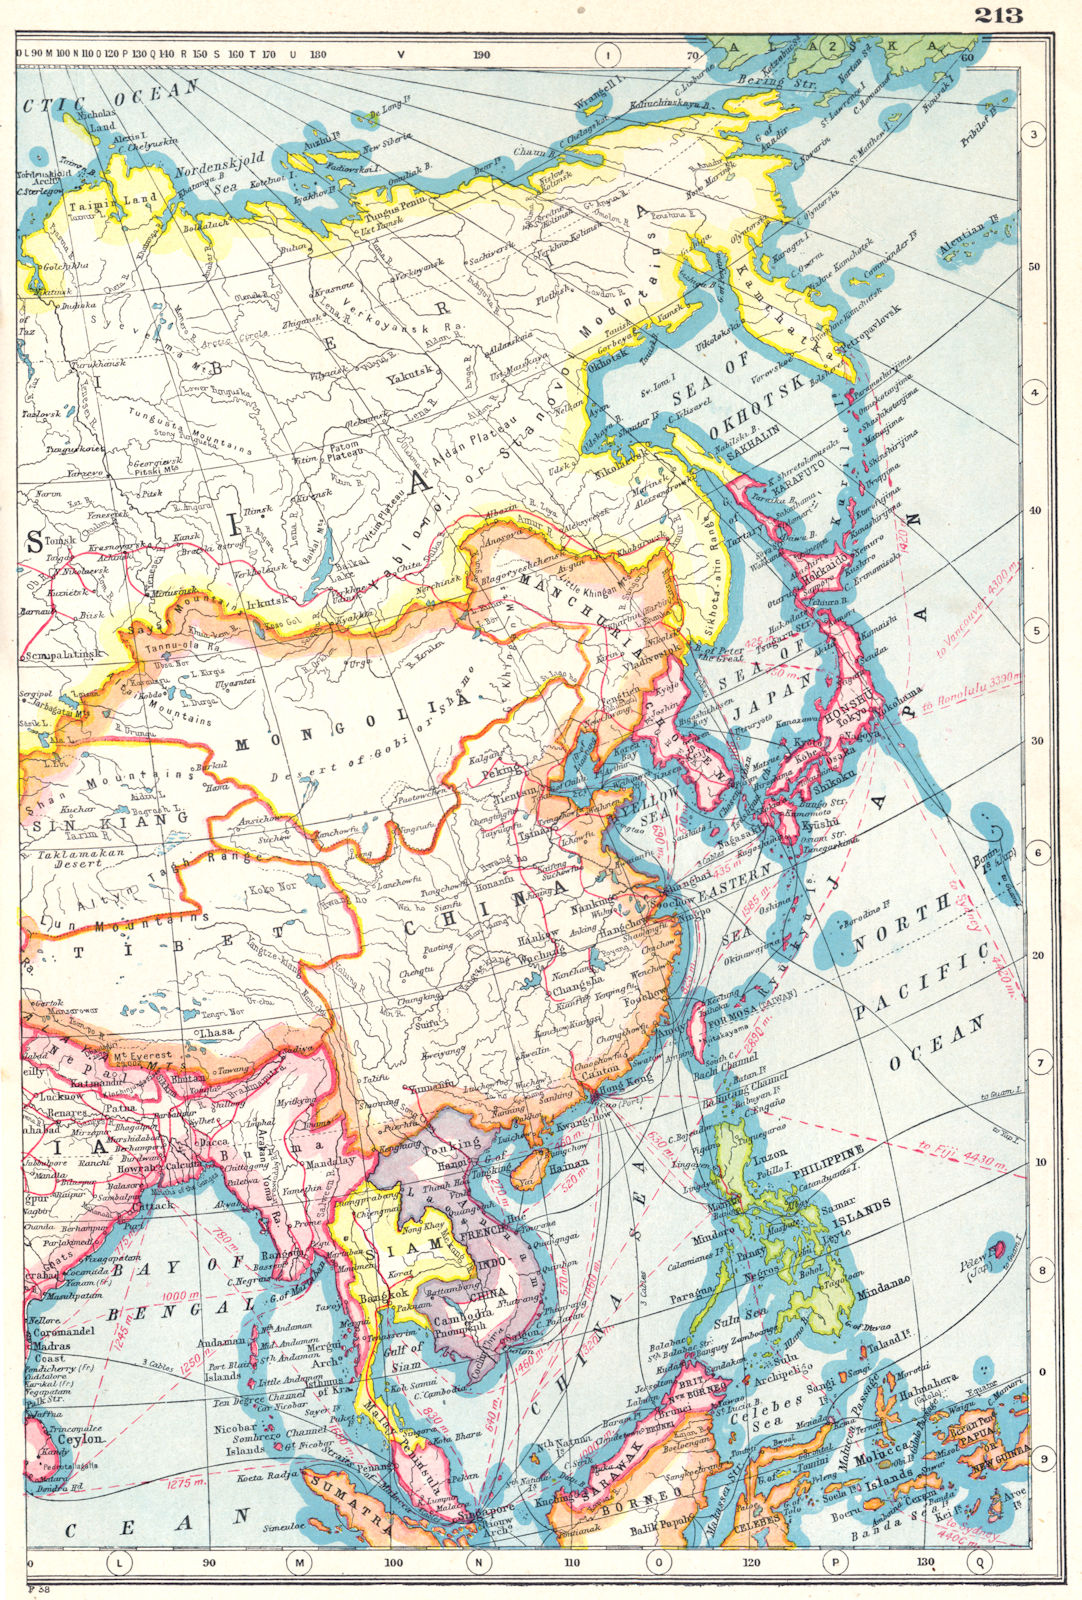 EAST ASIA. China Philippines Japan Korea Siam French Indochina Malaya 1920 map